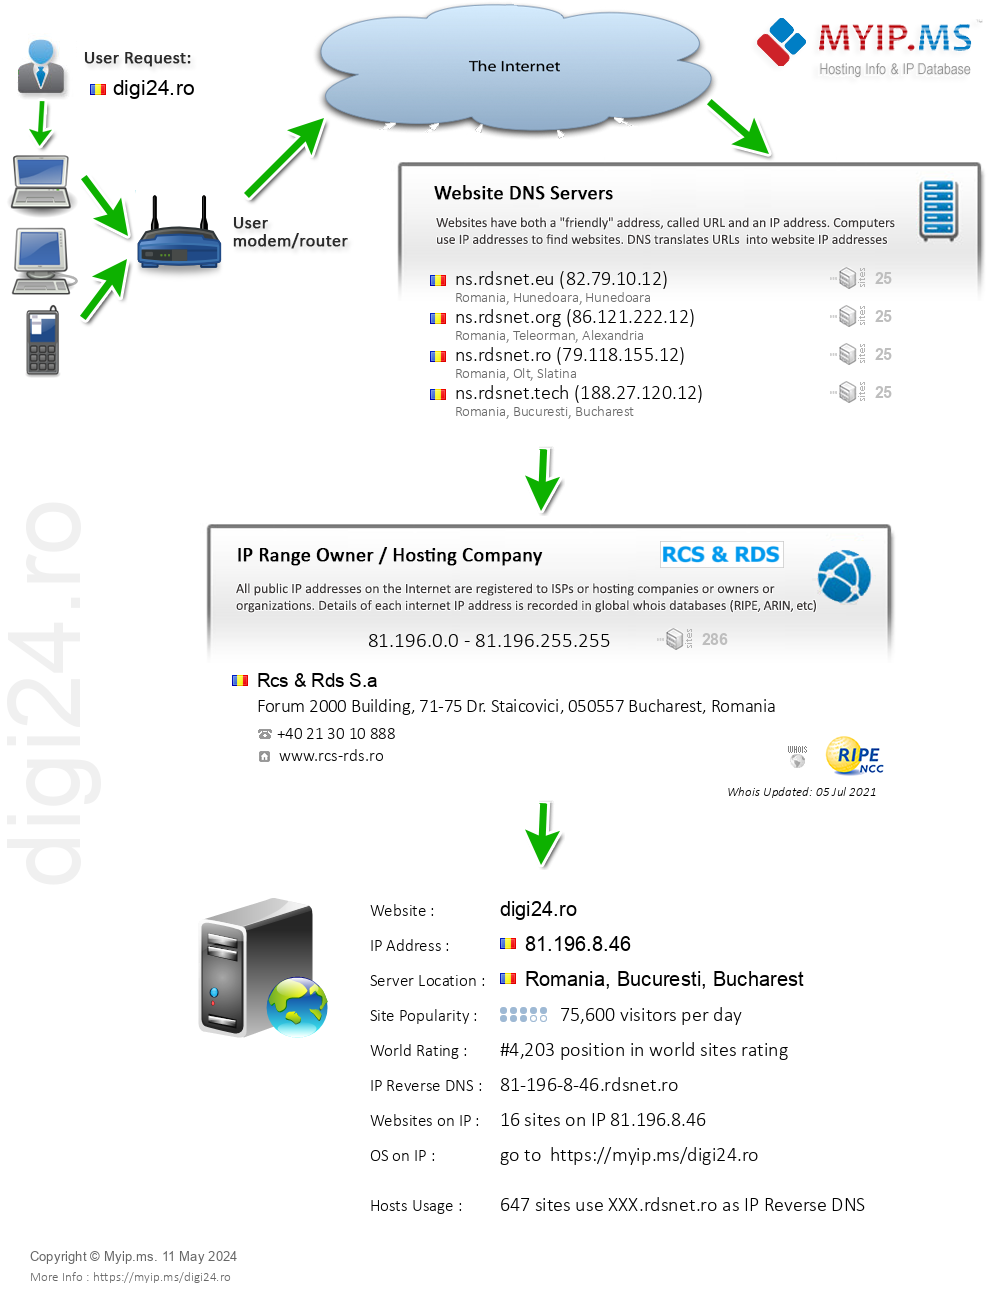 Digi24.ro - Website Hosting Visual IP Diagram